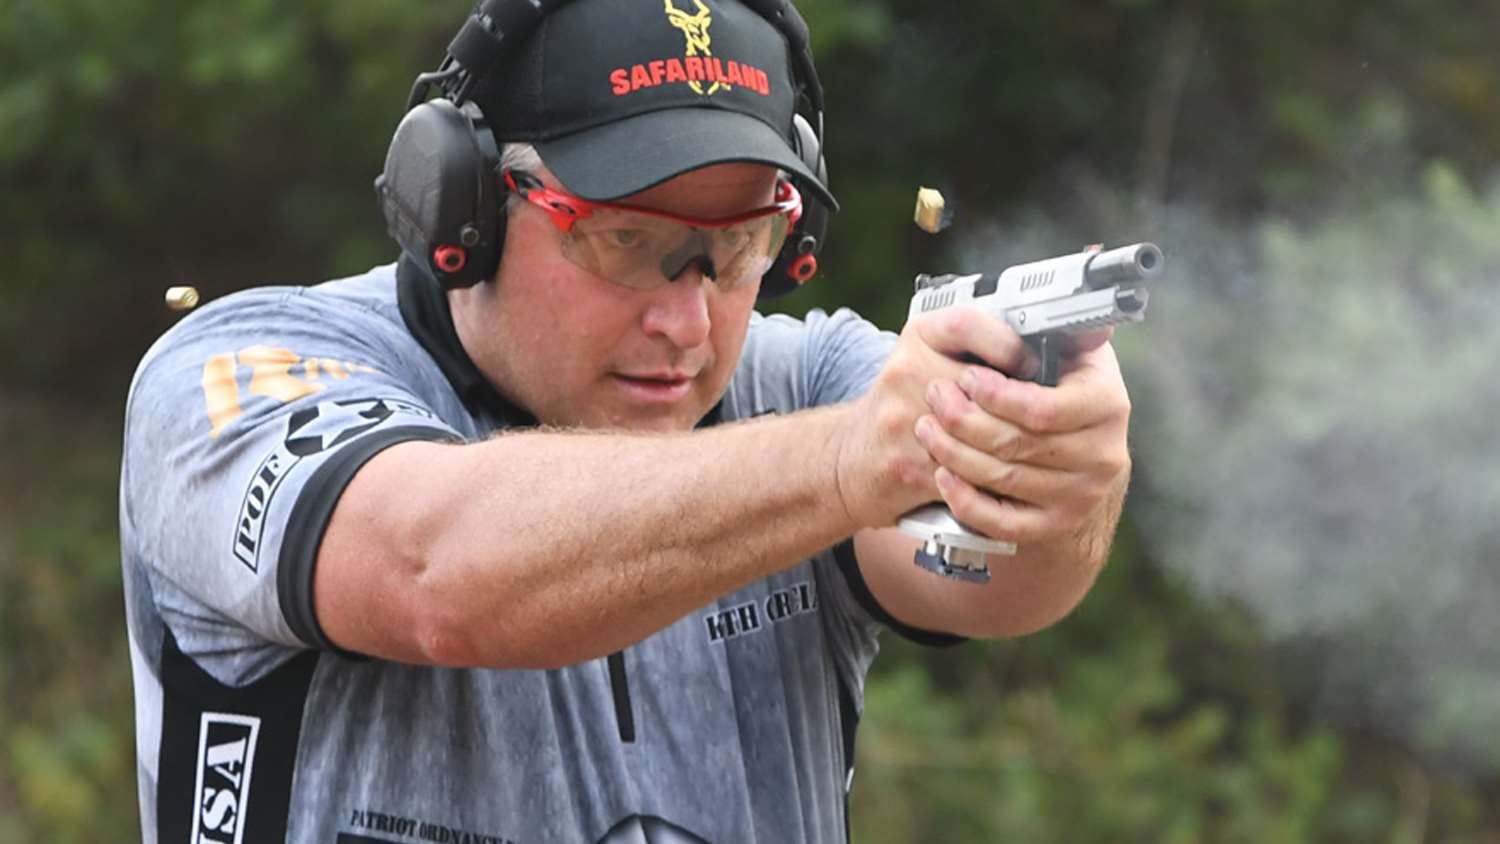 Keith Garcia | 2019 USPSA Multi-Gun Nationals